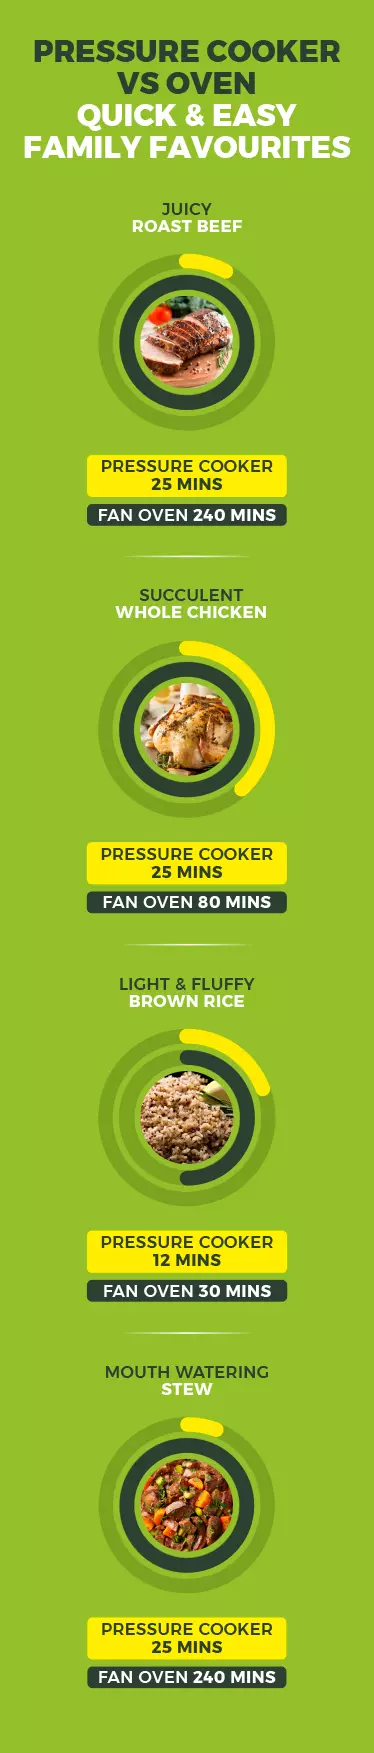 energy-saving-Pressurecooker-vs-oven-mob.jpg